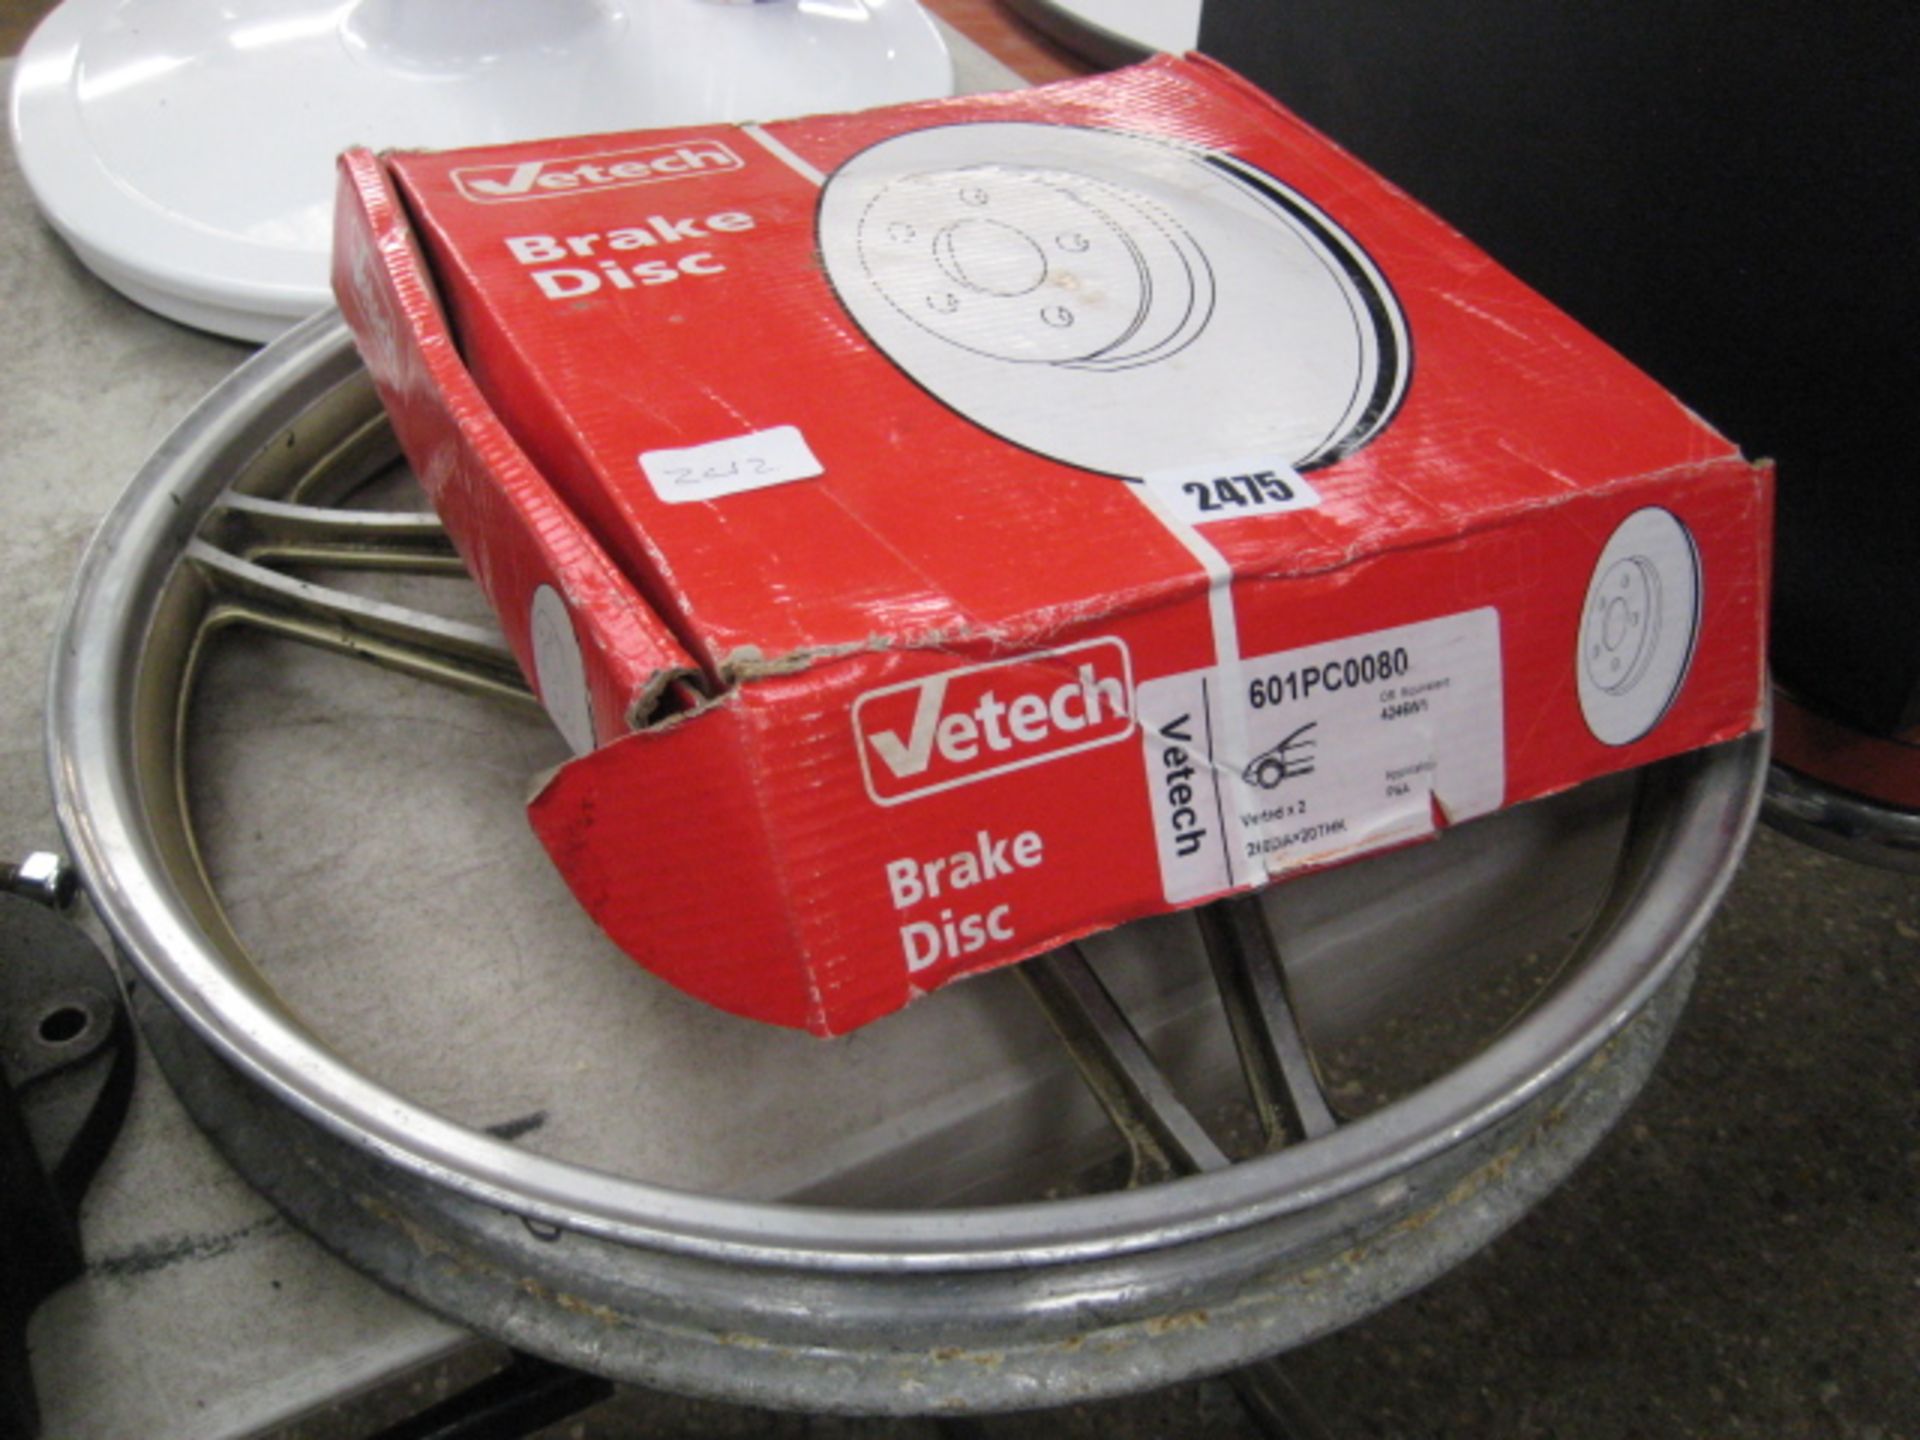 Set of Vtech brake discs and wheel